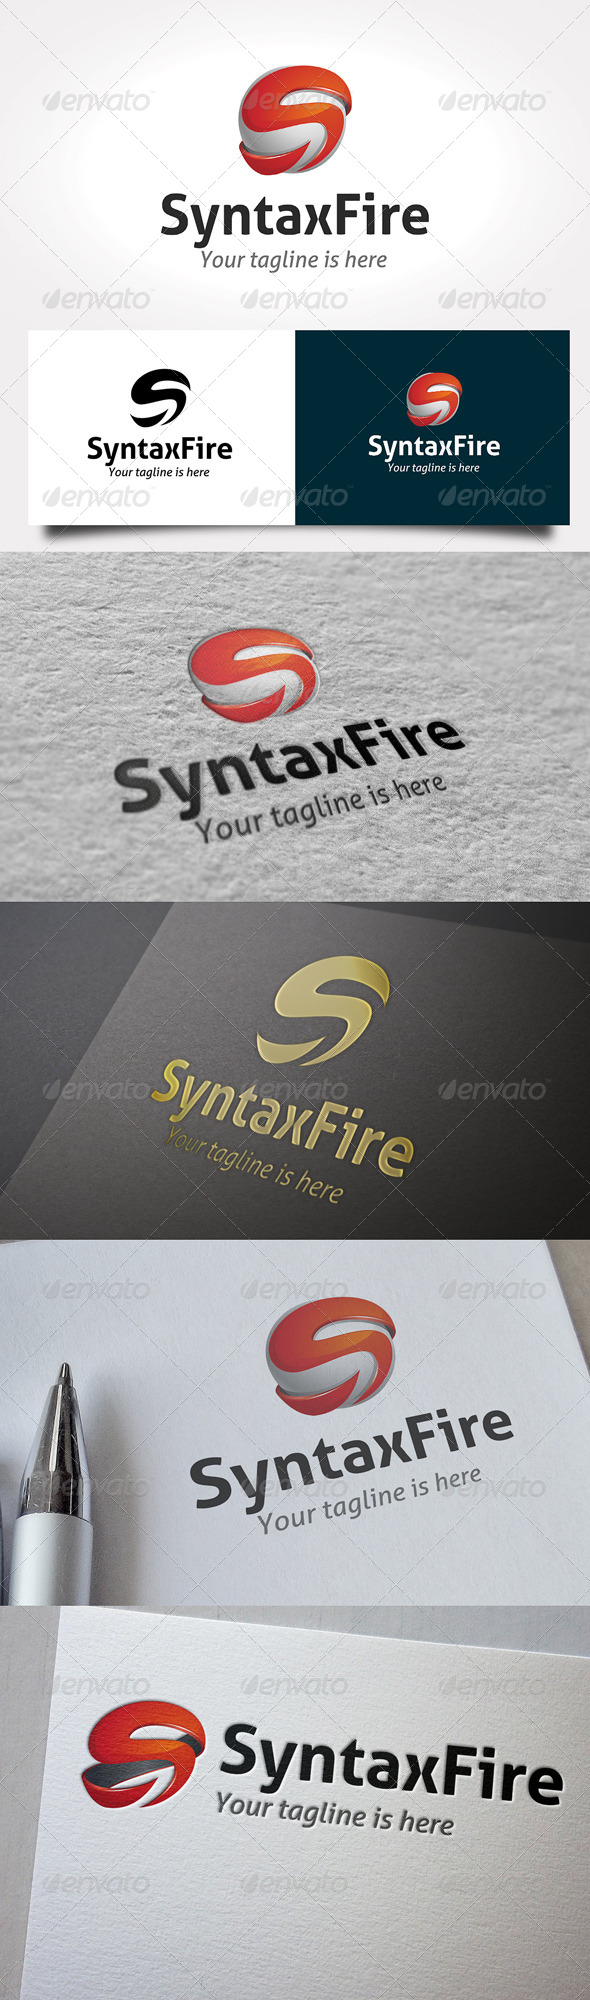 Syntax Fire Logo